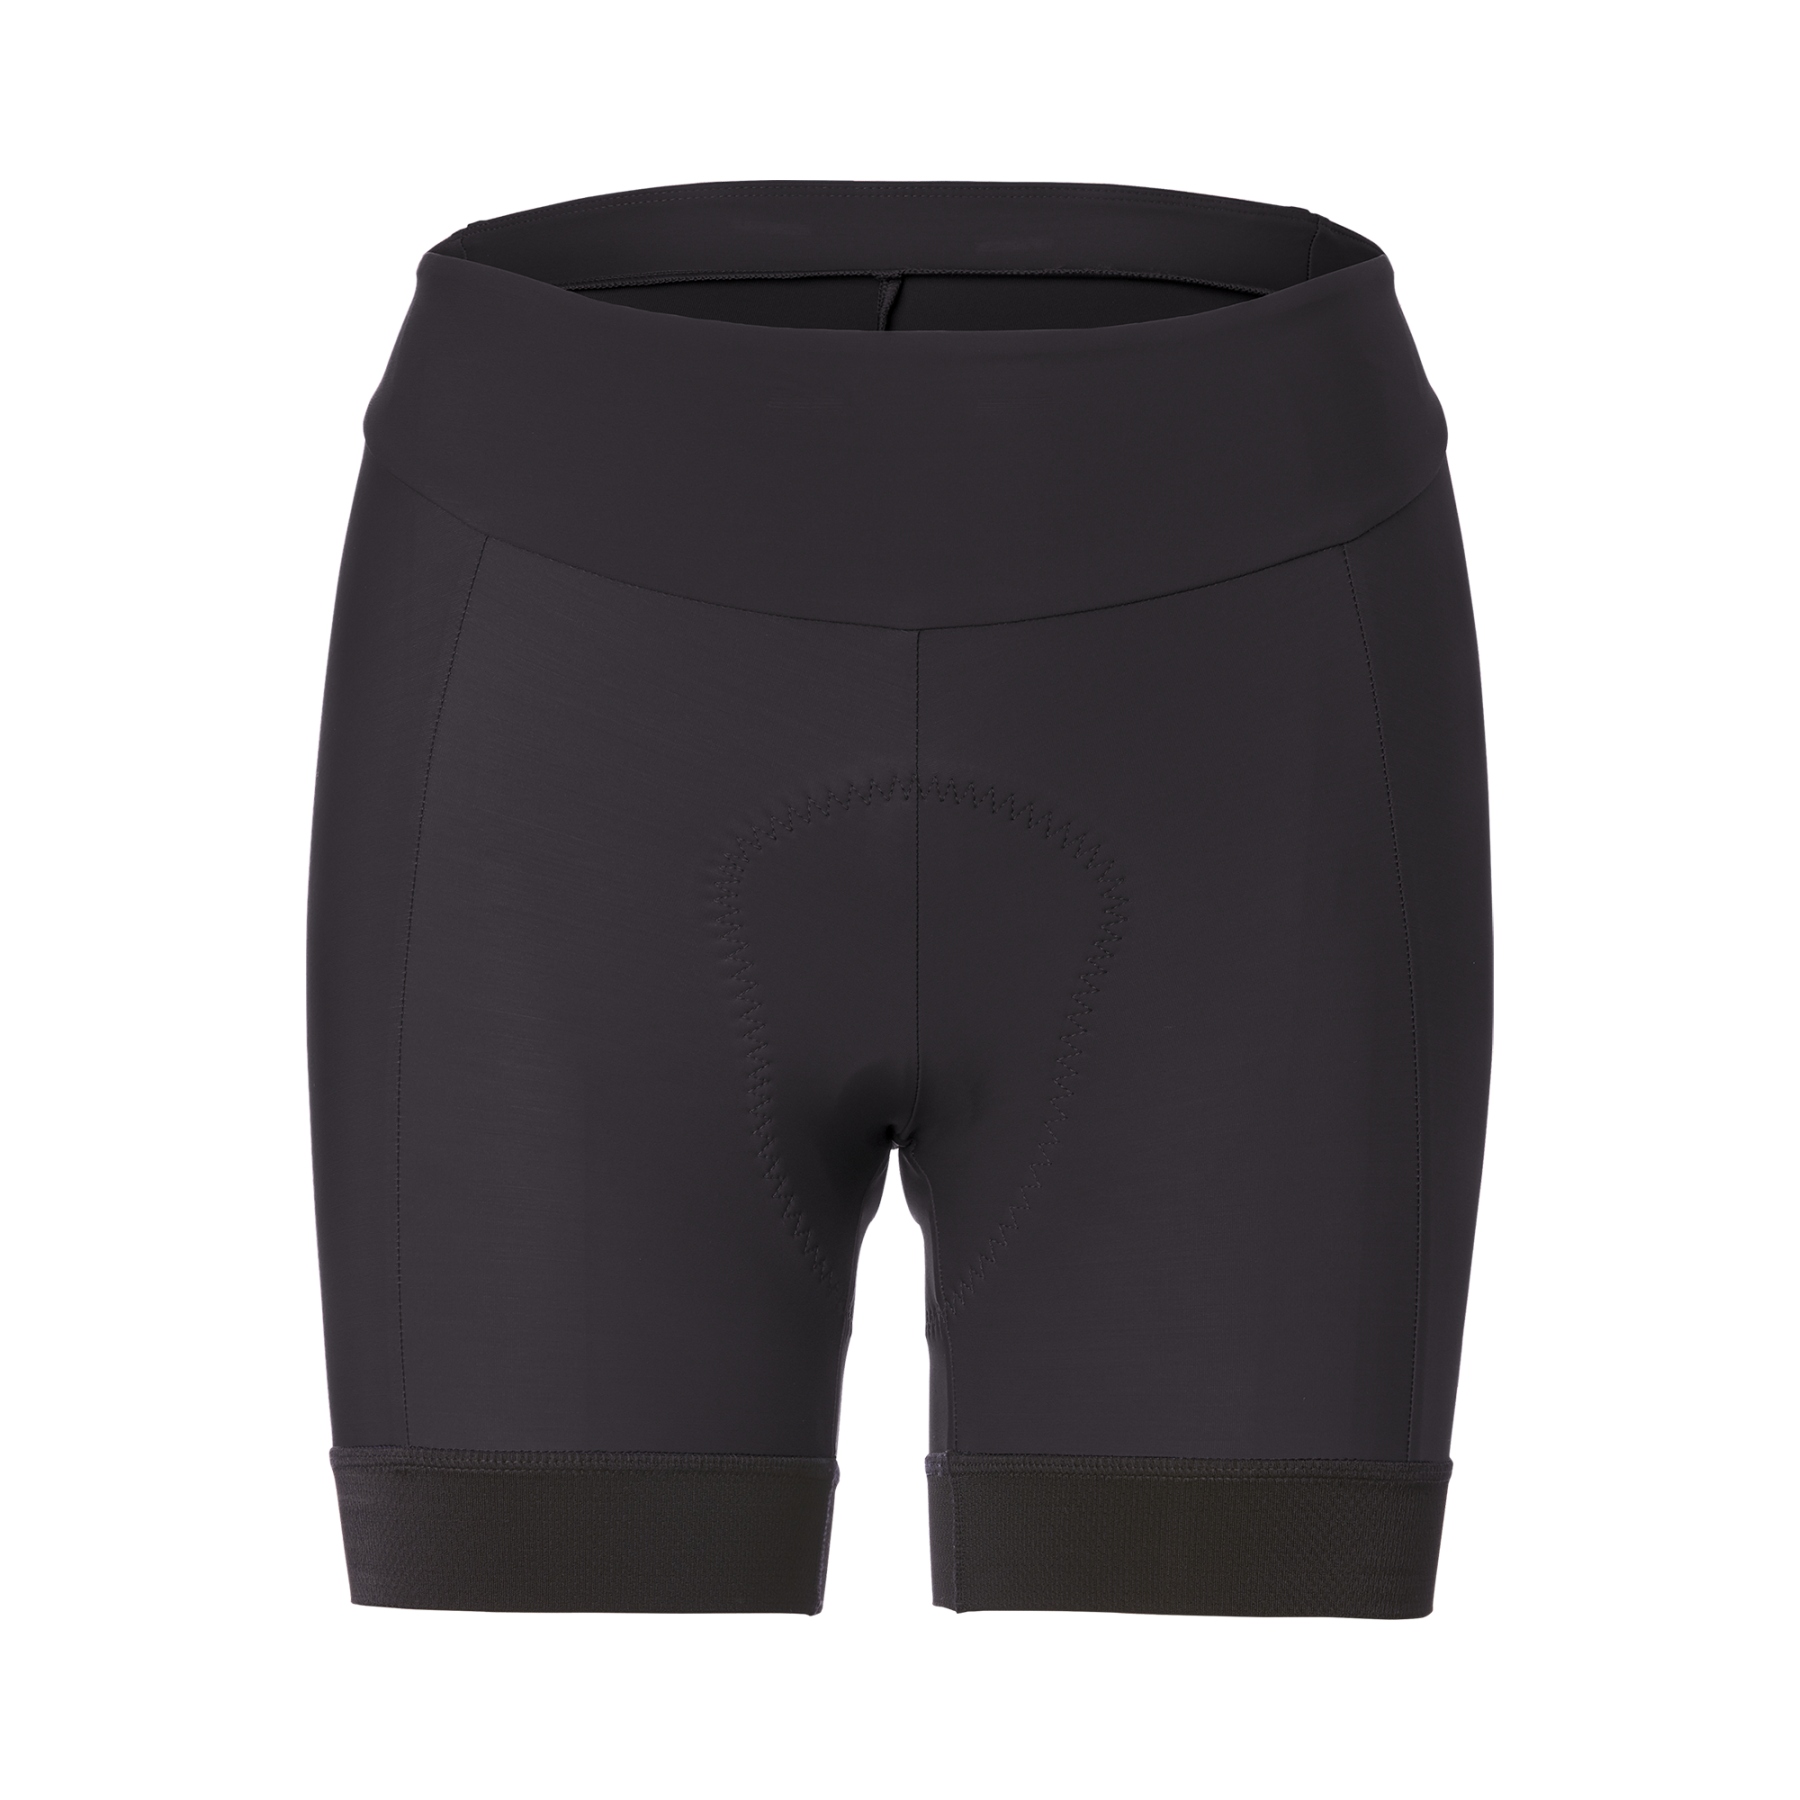 Productfoto van Giro Chrono Sporty Shorts Dames - zwart